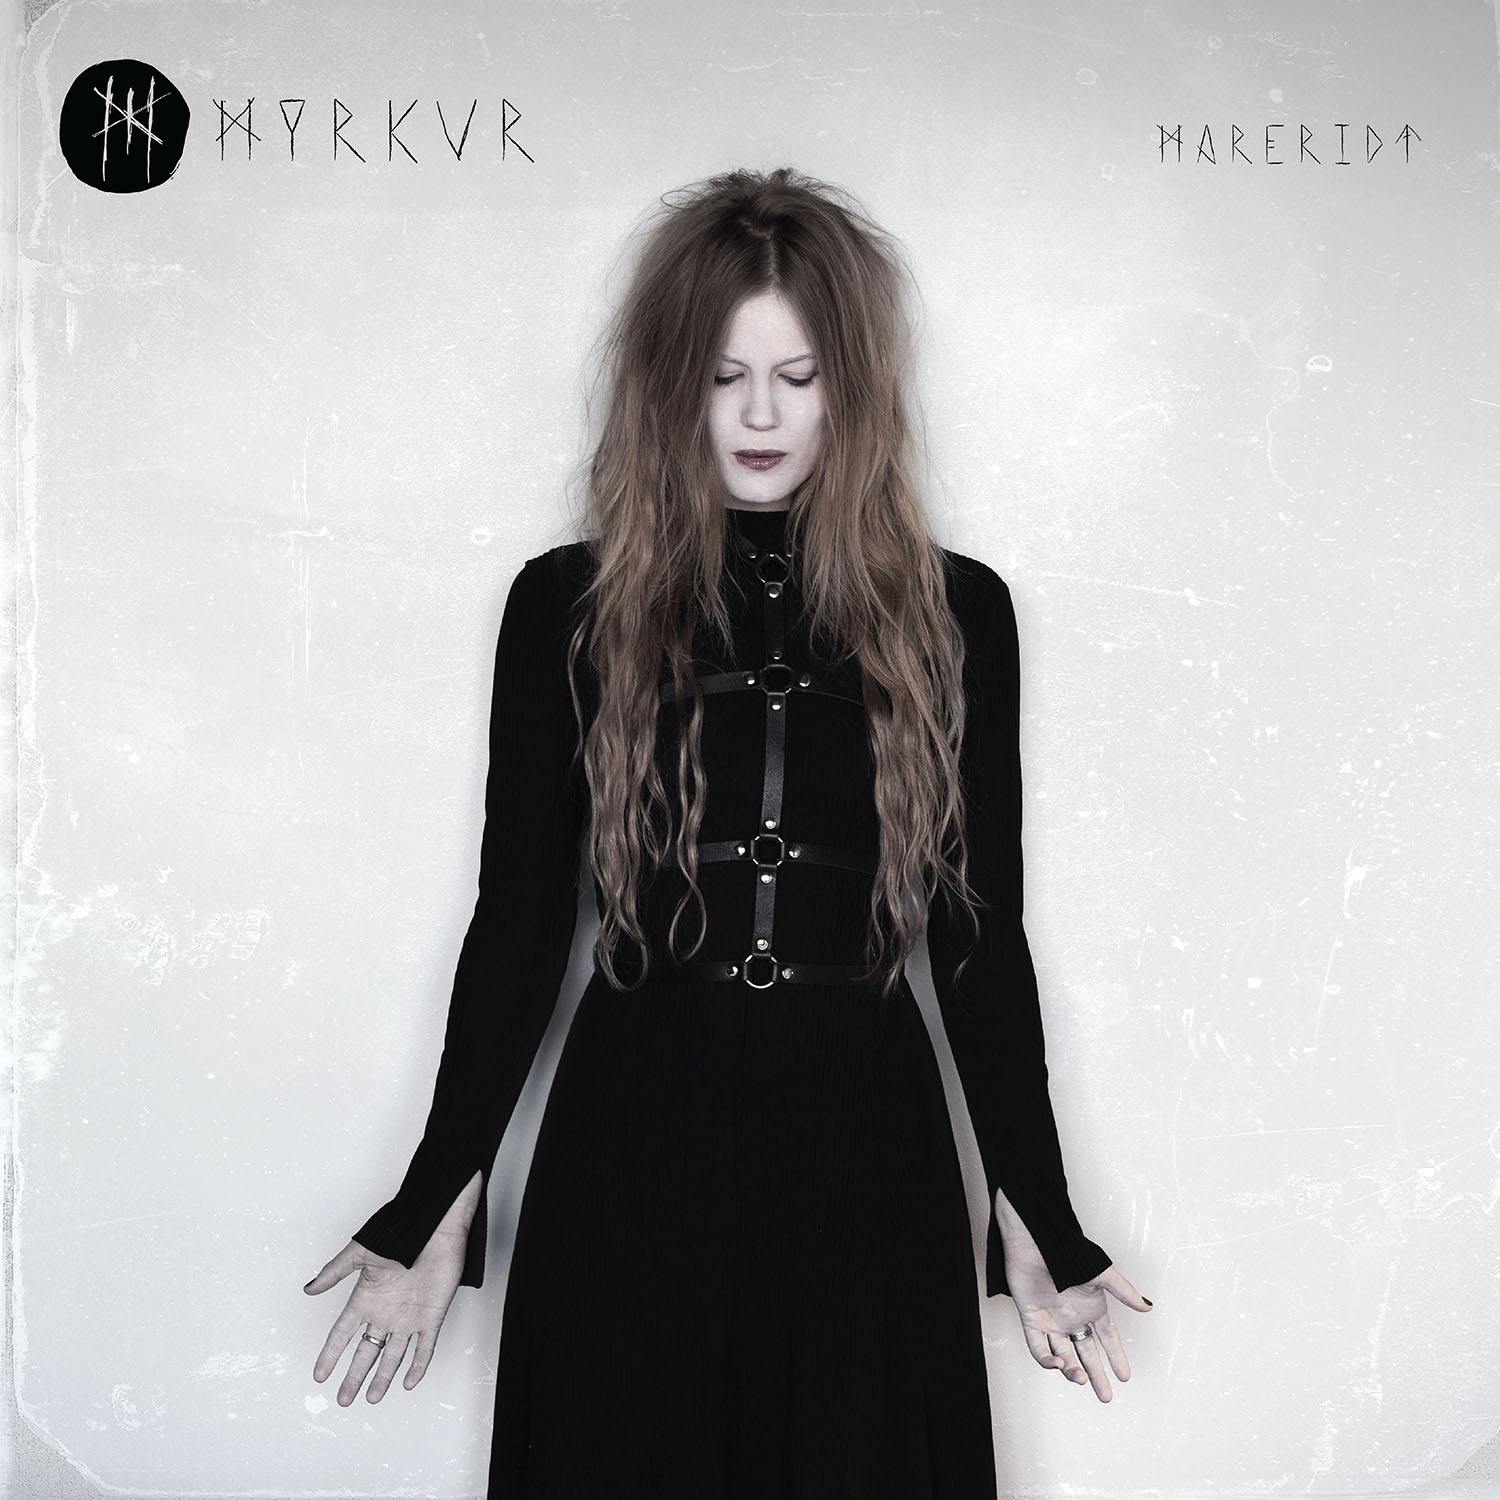 Buy – Myrkur "Mareridt" 12" – Band & Music Merch – Cold Cuts Merch